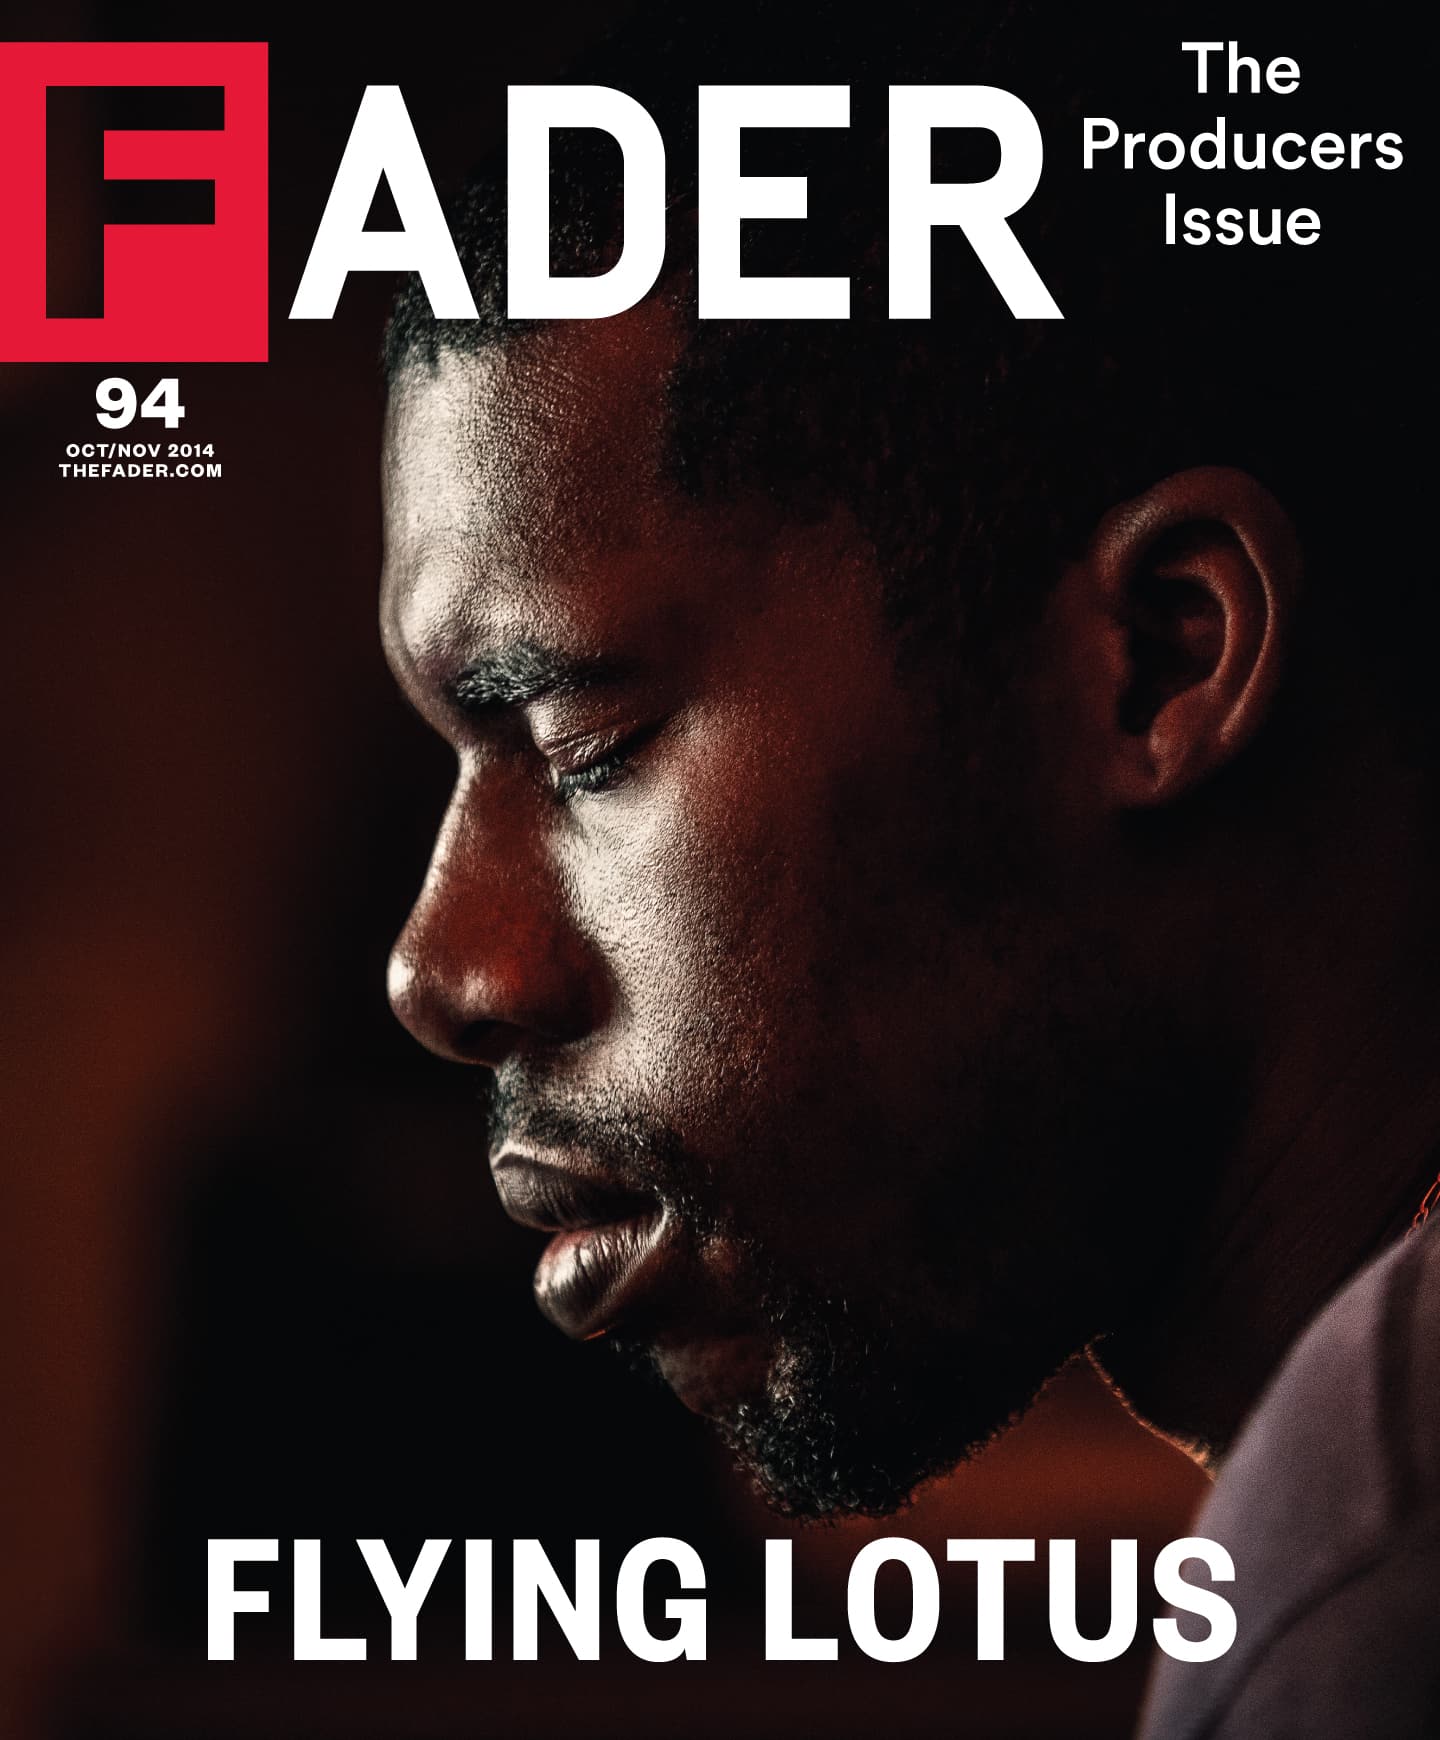 Flying Lotus Fader cover story Andy Beta Mark Mahaney